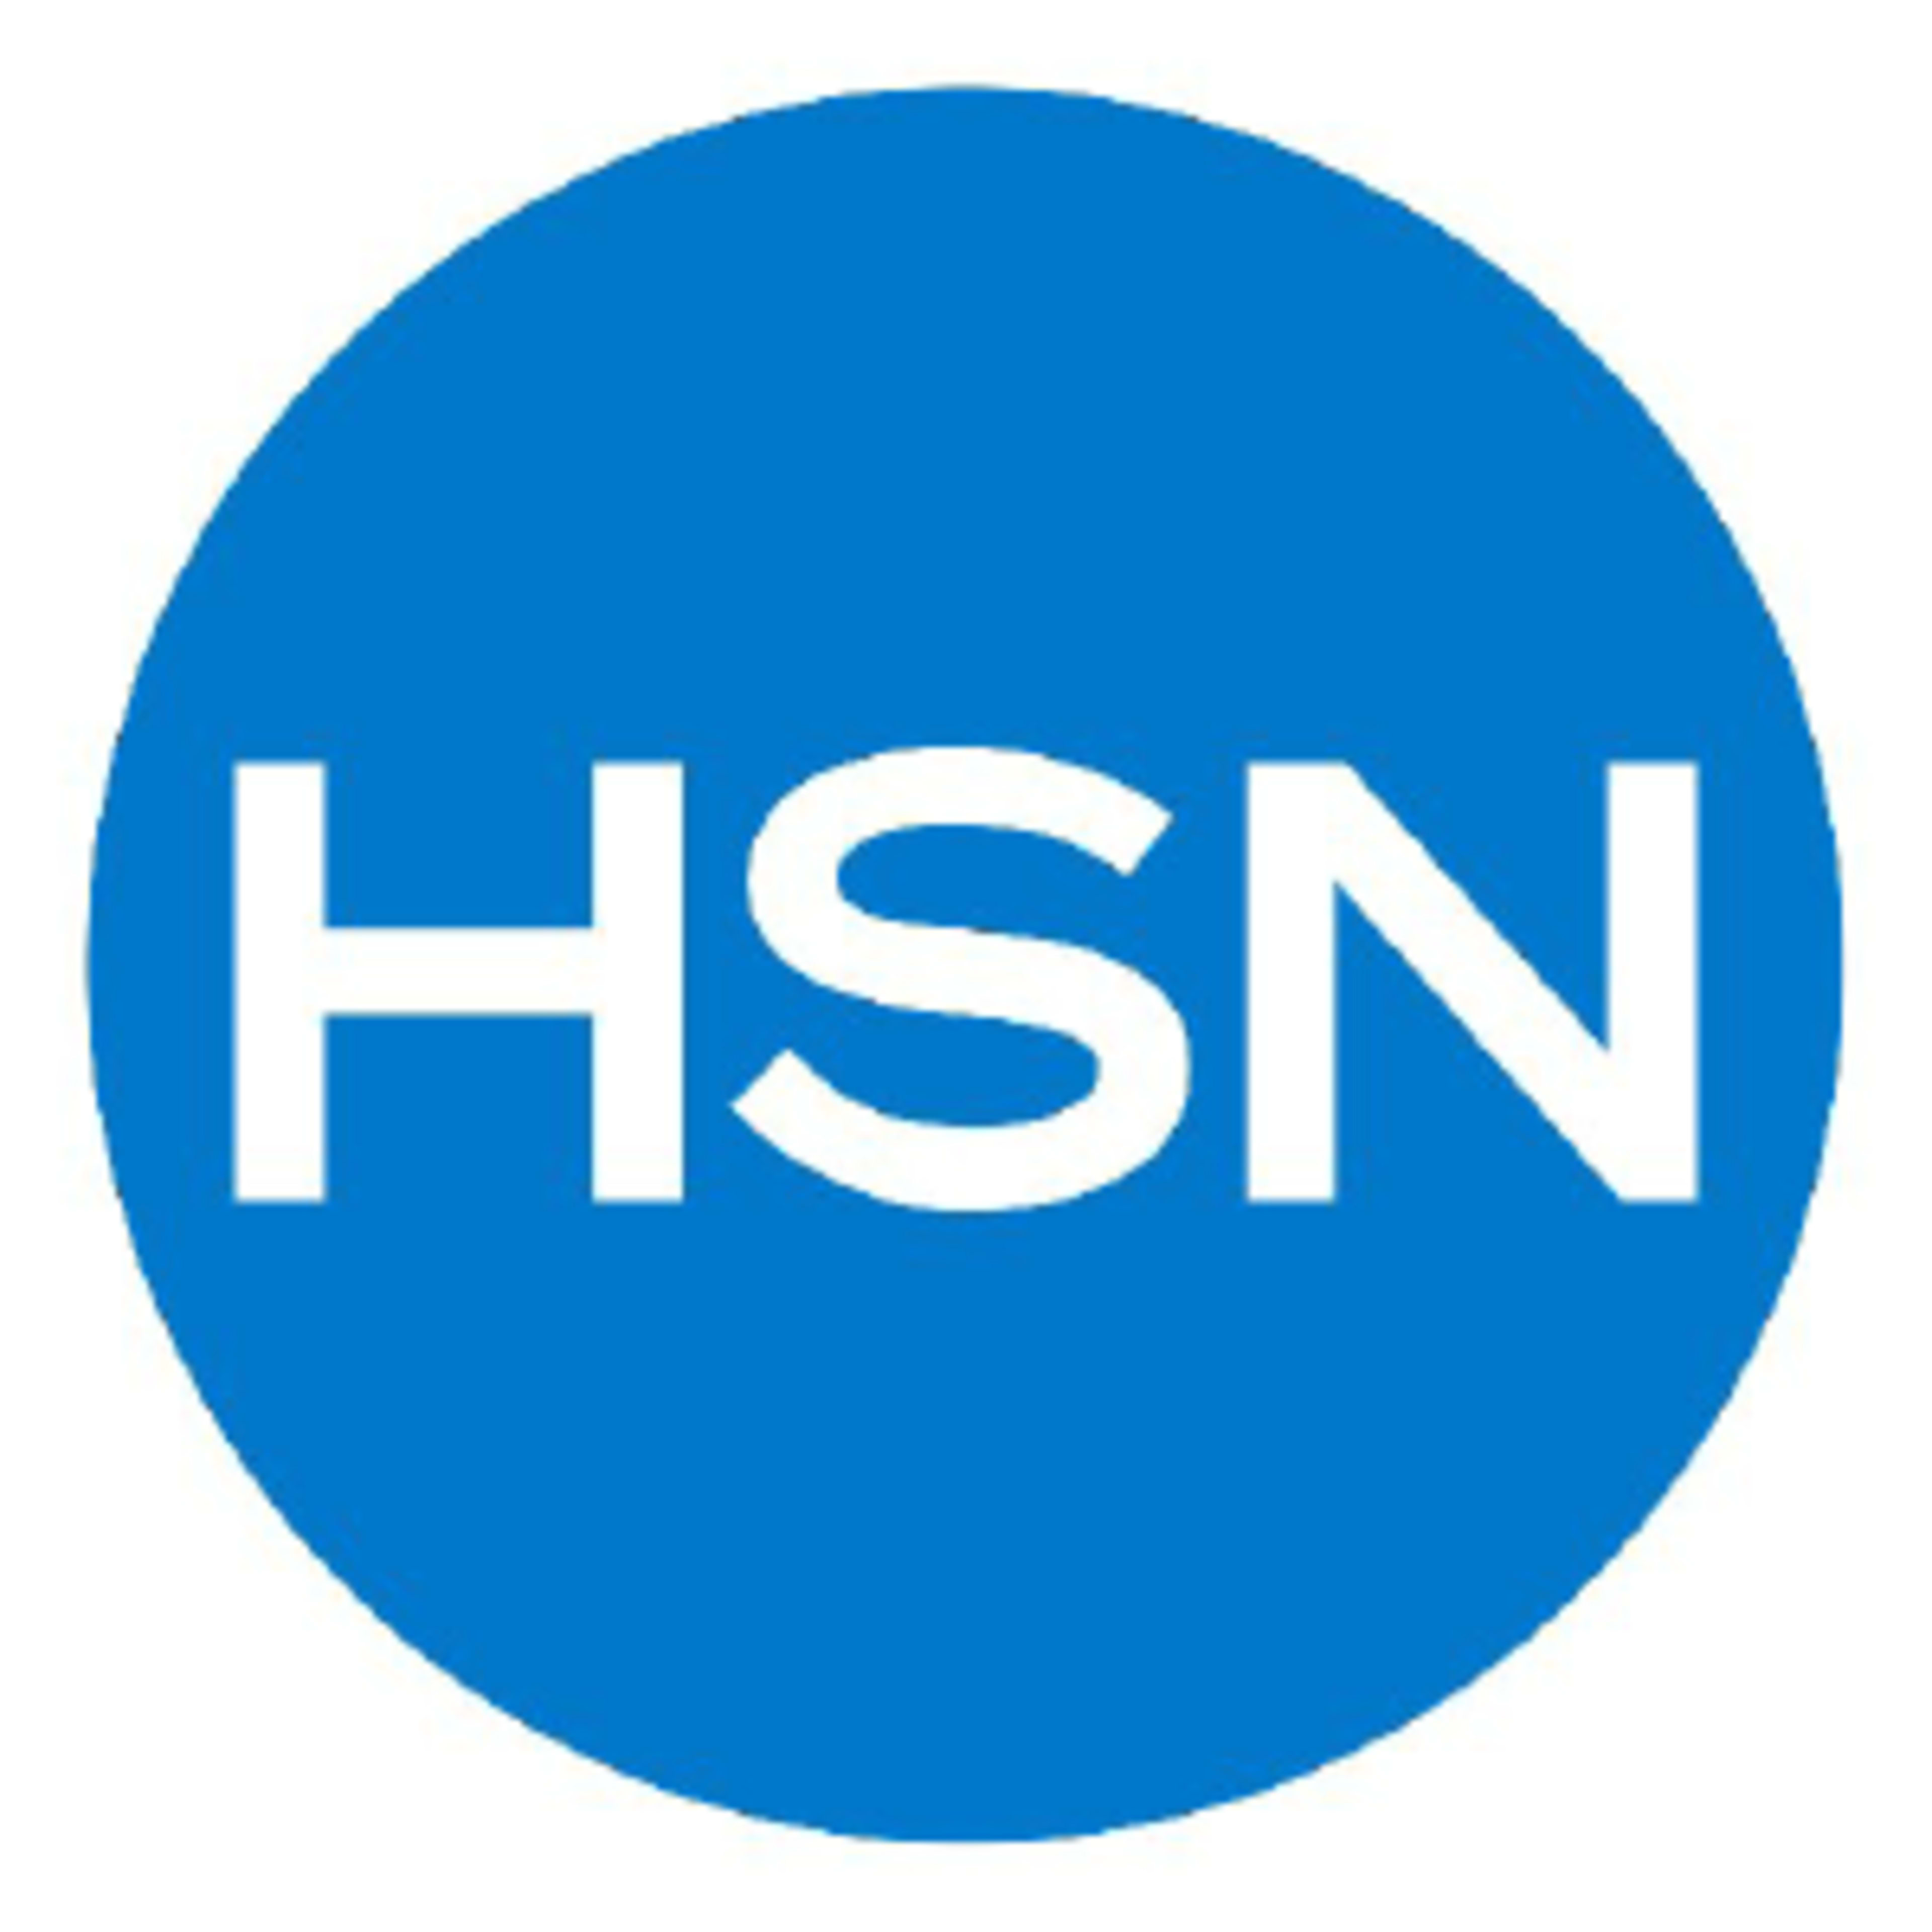 HSN.com - Home Shopping Network